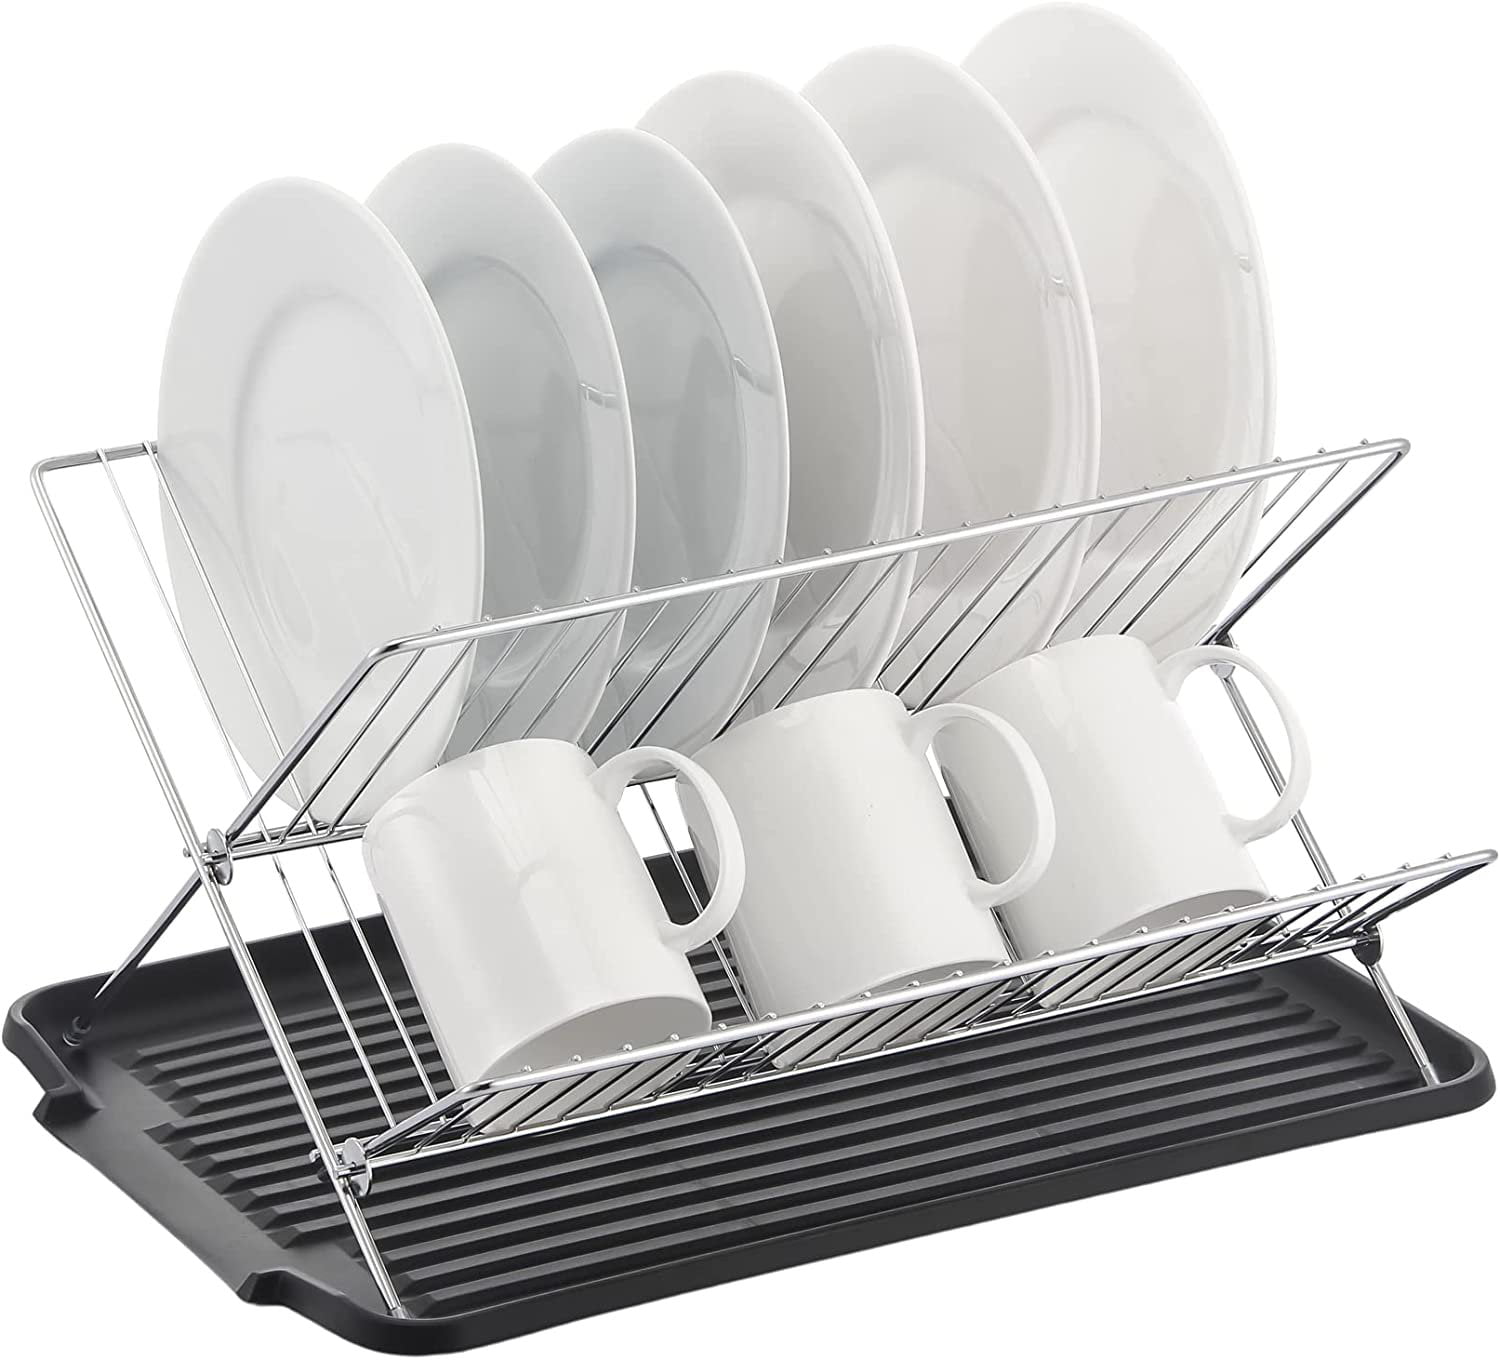 Folding Dish Rack Kitchen items Oil strainer Articulos de cocina y